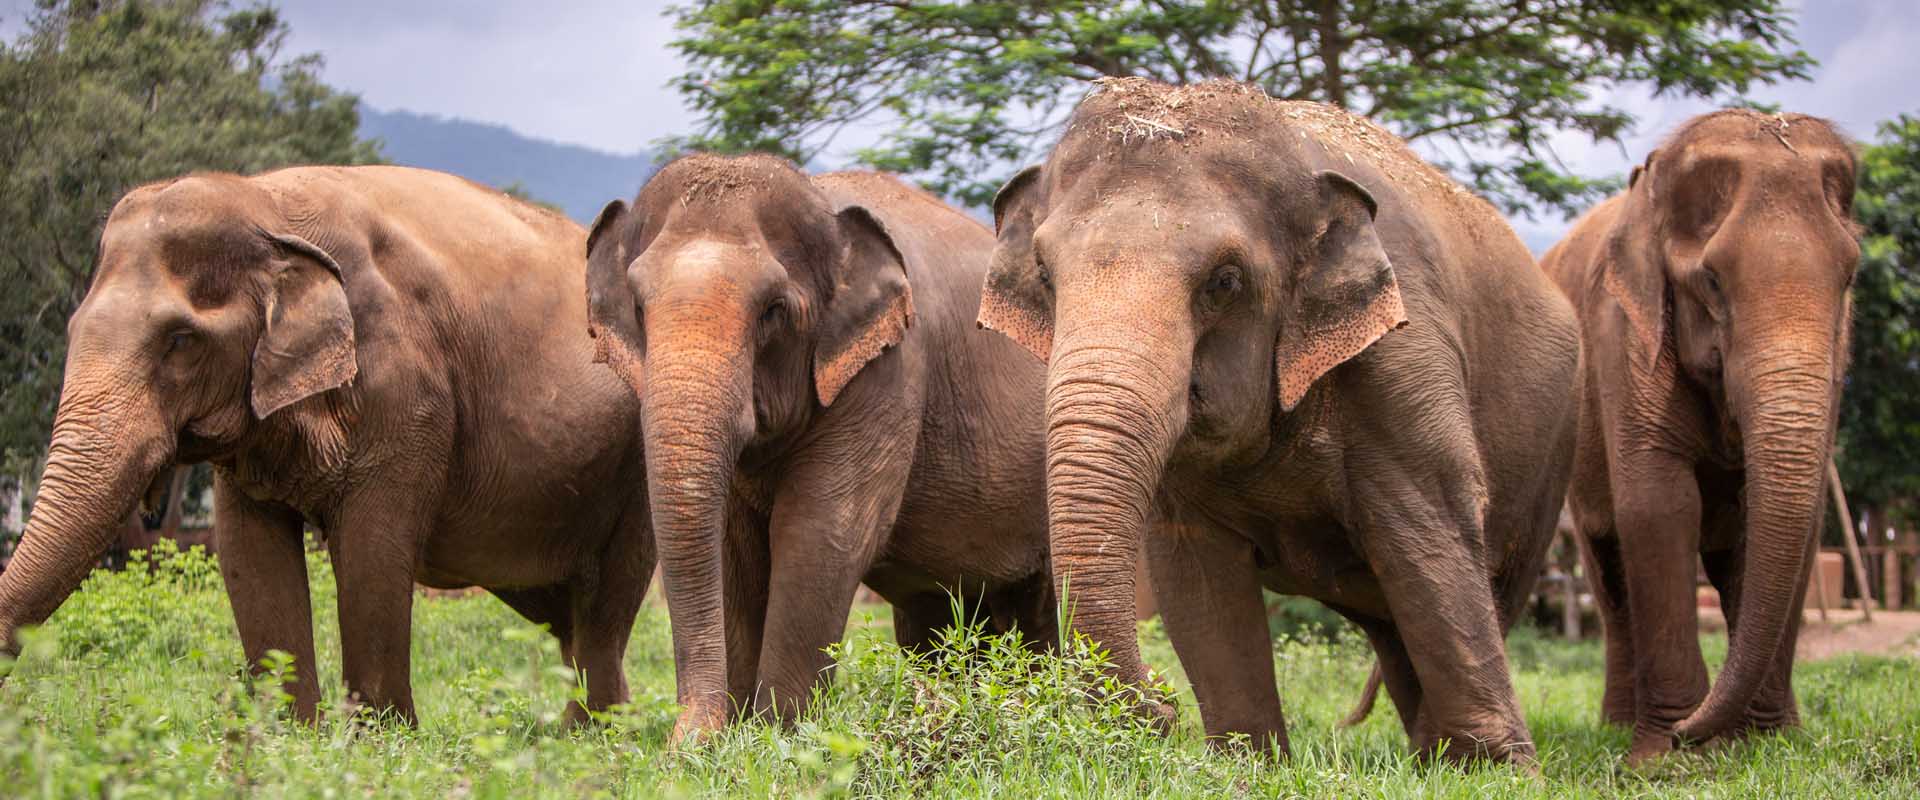 Elephant Nature Park Partners